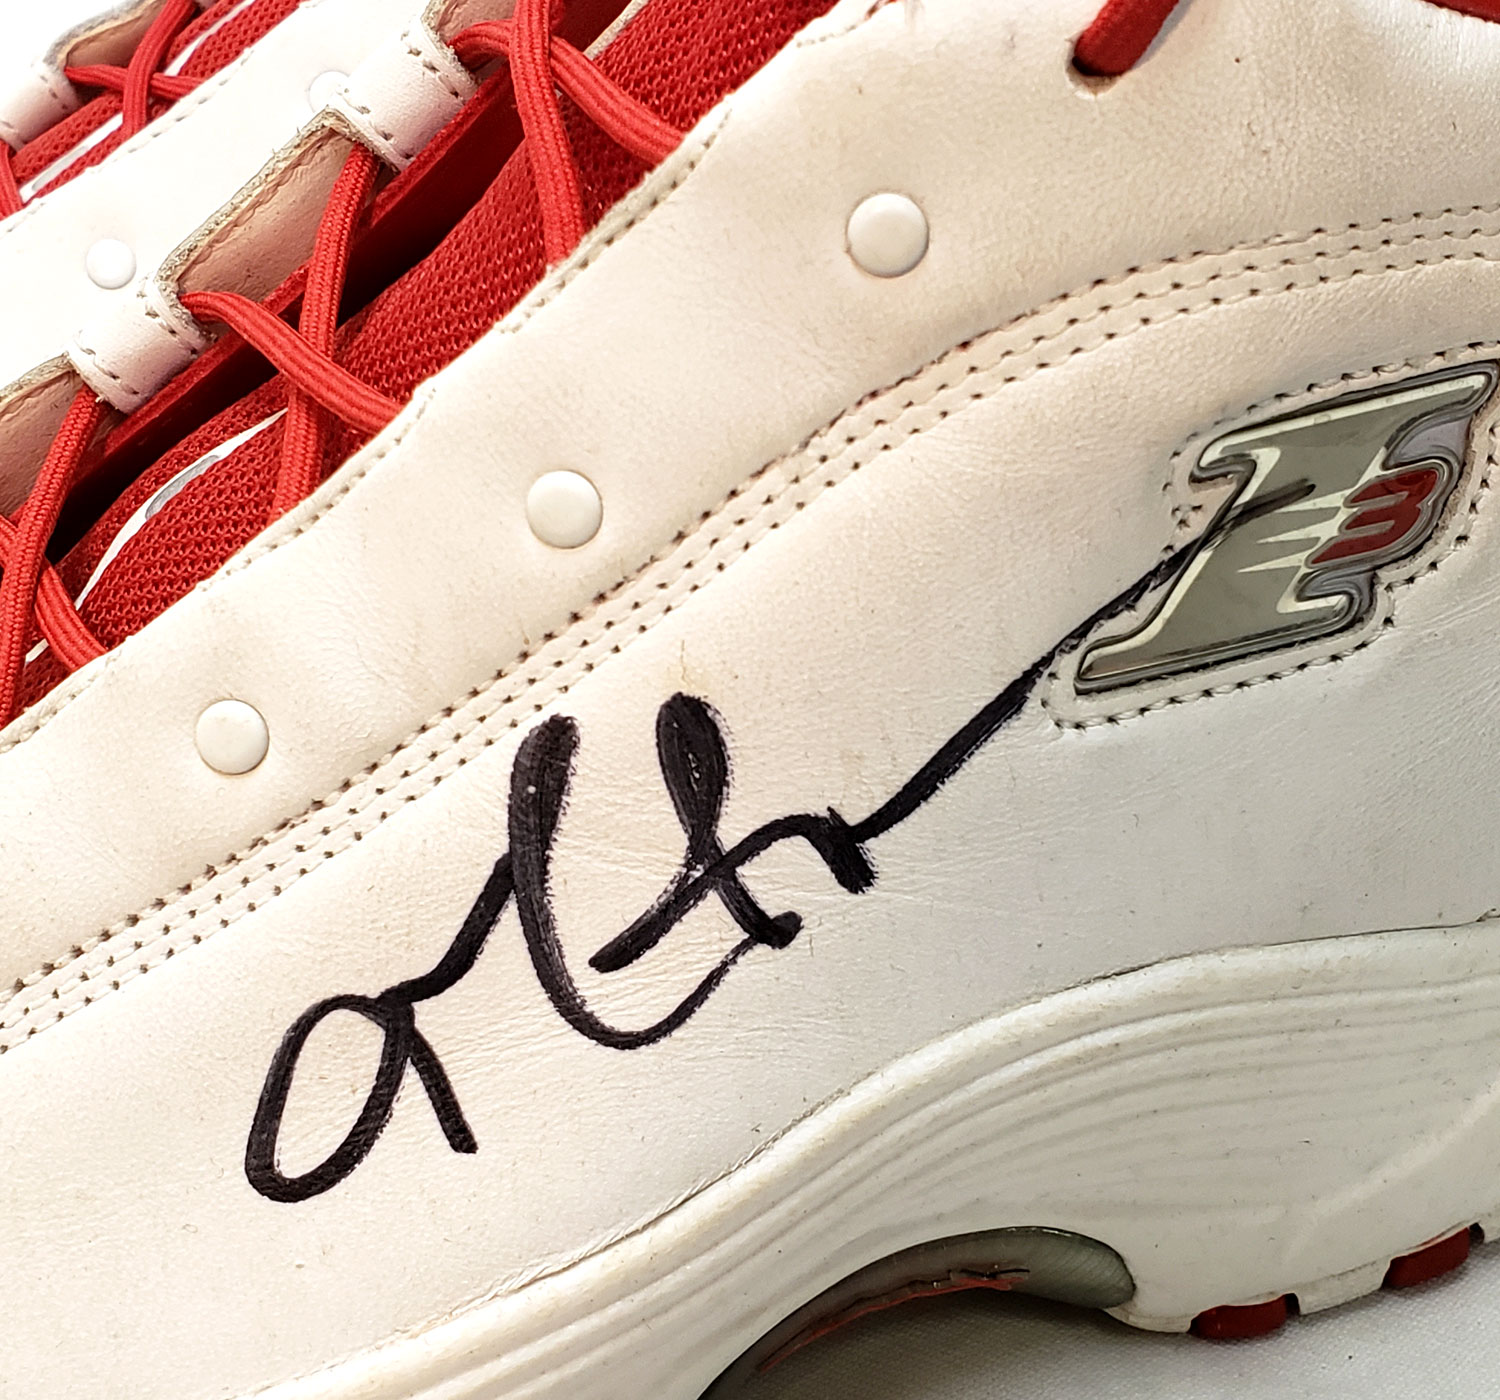 GIVEAWAY ALERT – Win a Pair of Autographed Allen Iverson Shoes!